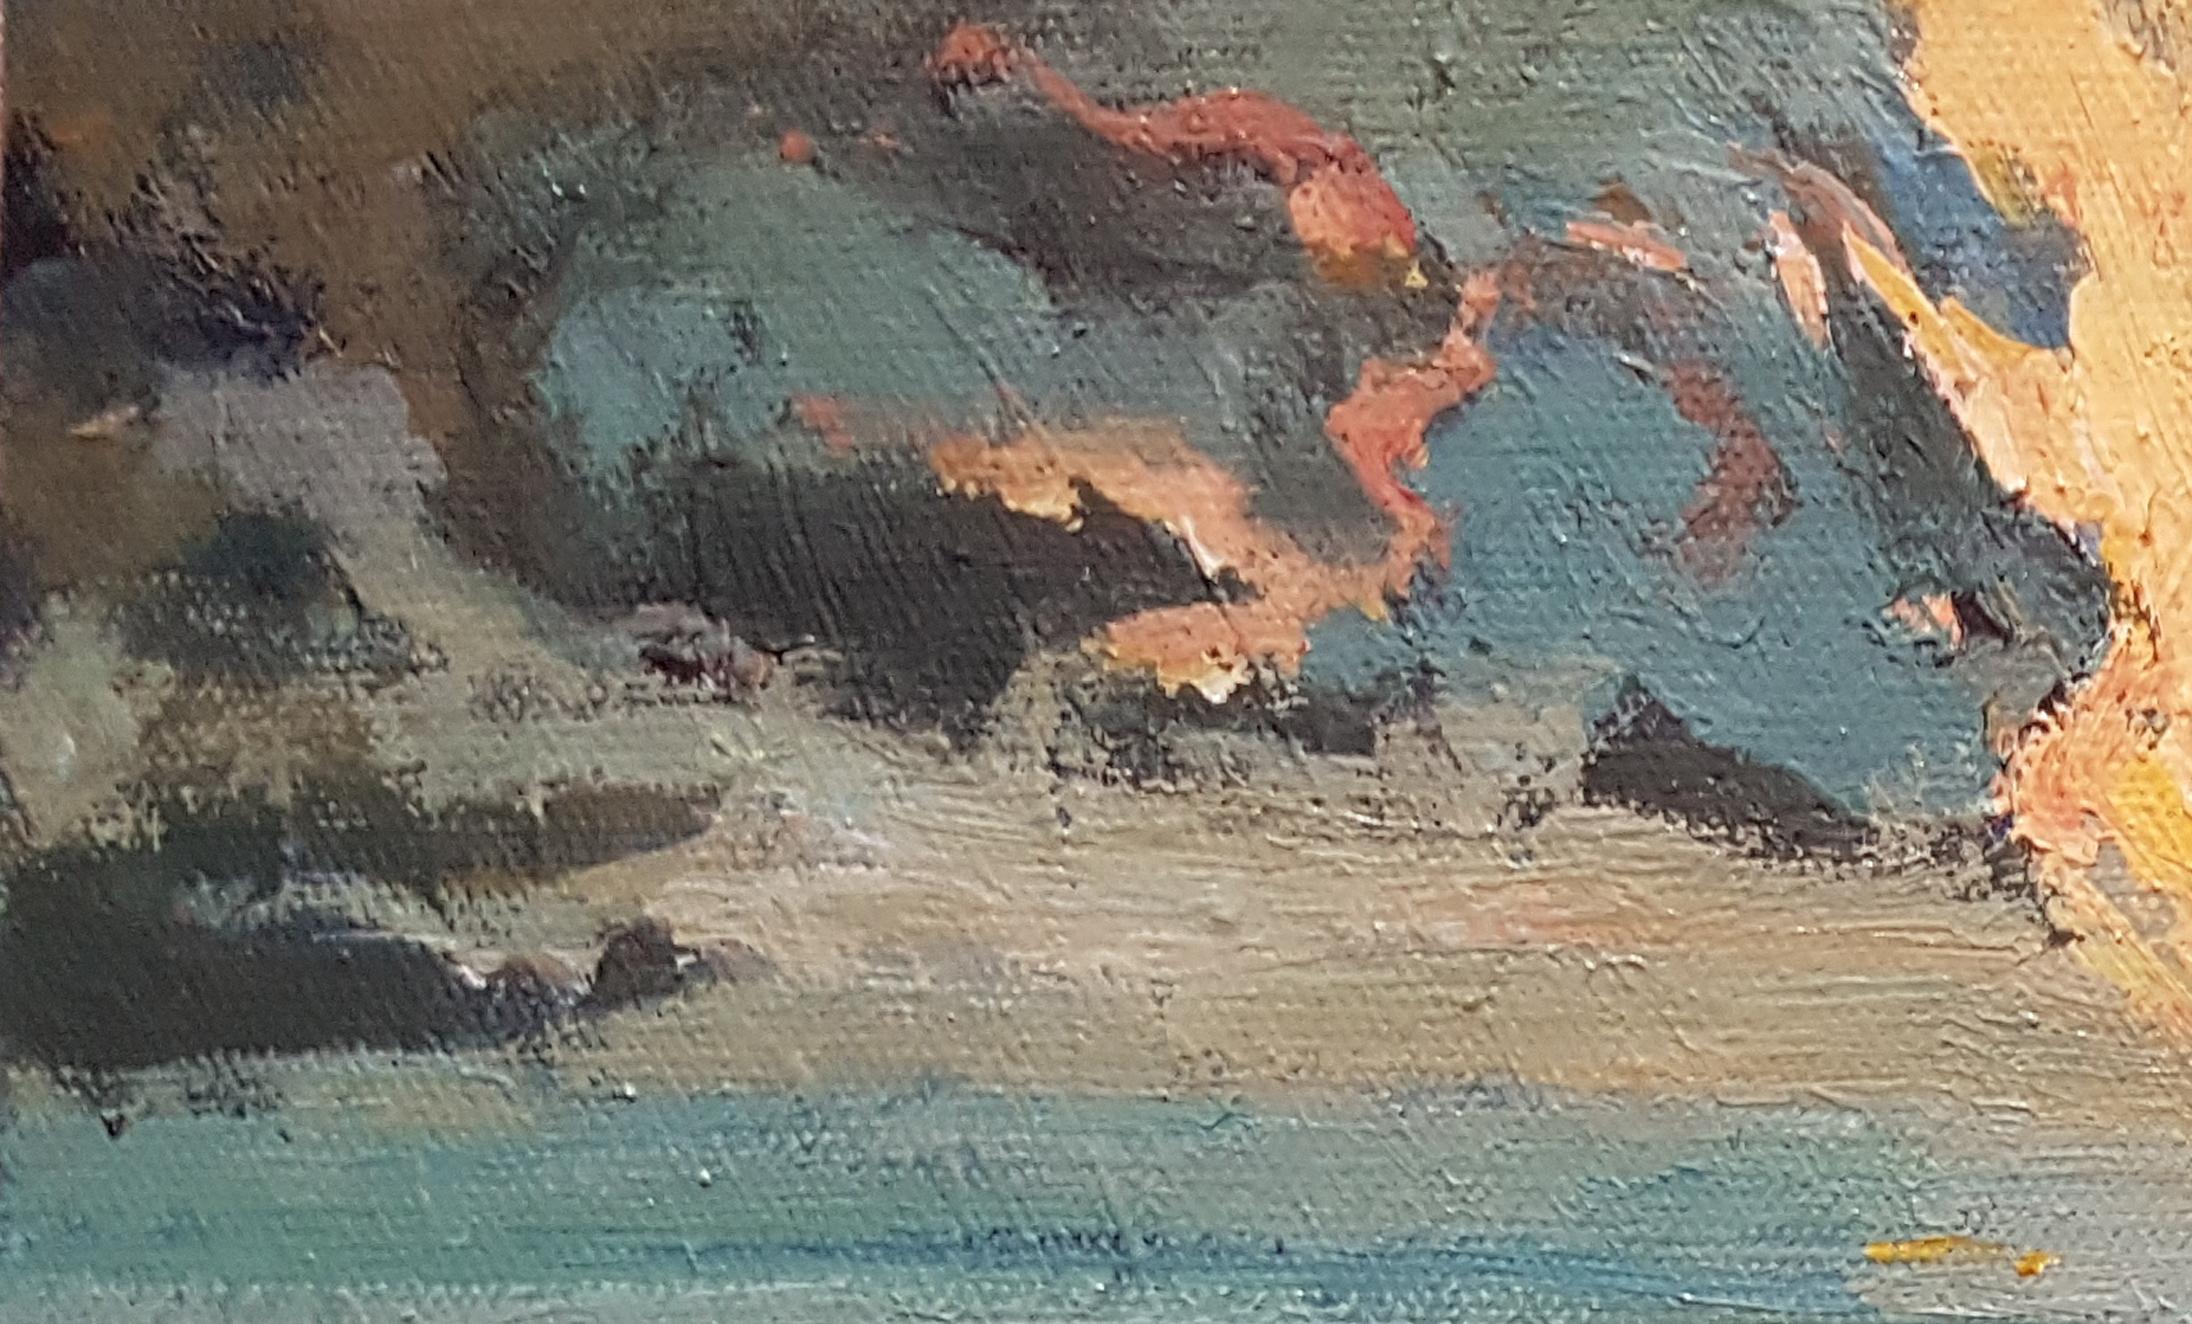 Artist: Ara H. Hakobyan
Work: Original Oil Painting, Handmade Artwork, One of a Kind
Medium: Oil on Canvas
Year: 2017
Style: Impressionism
Subject: Sunset 
Size: 12